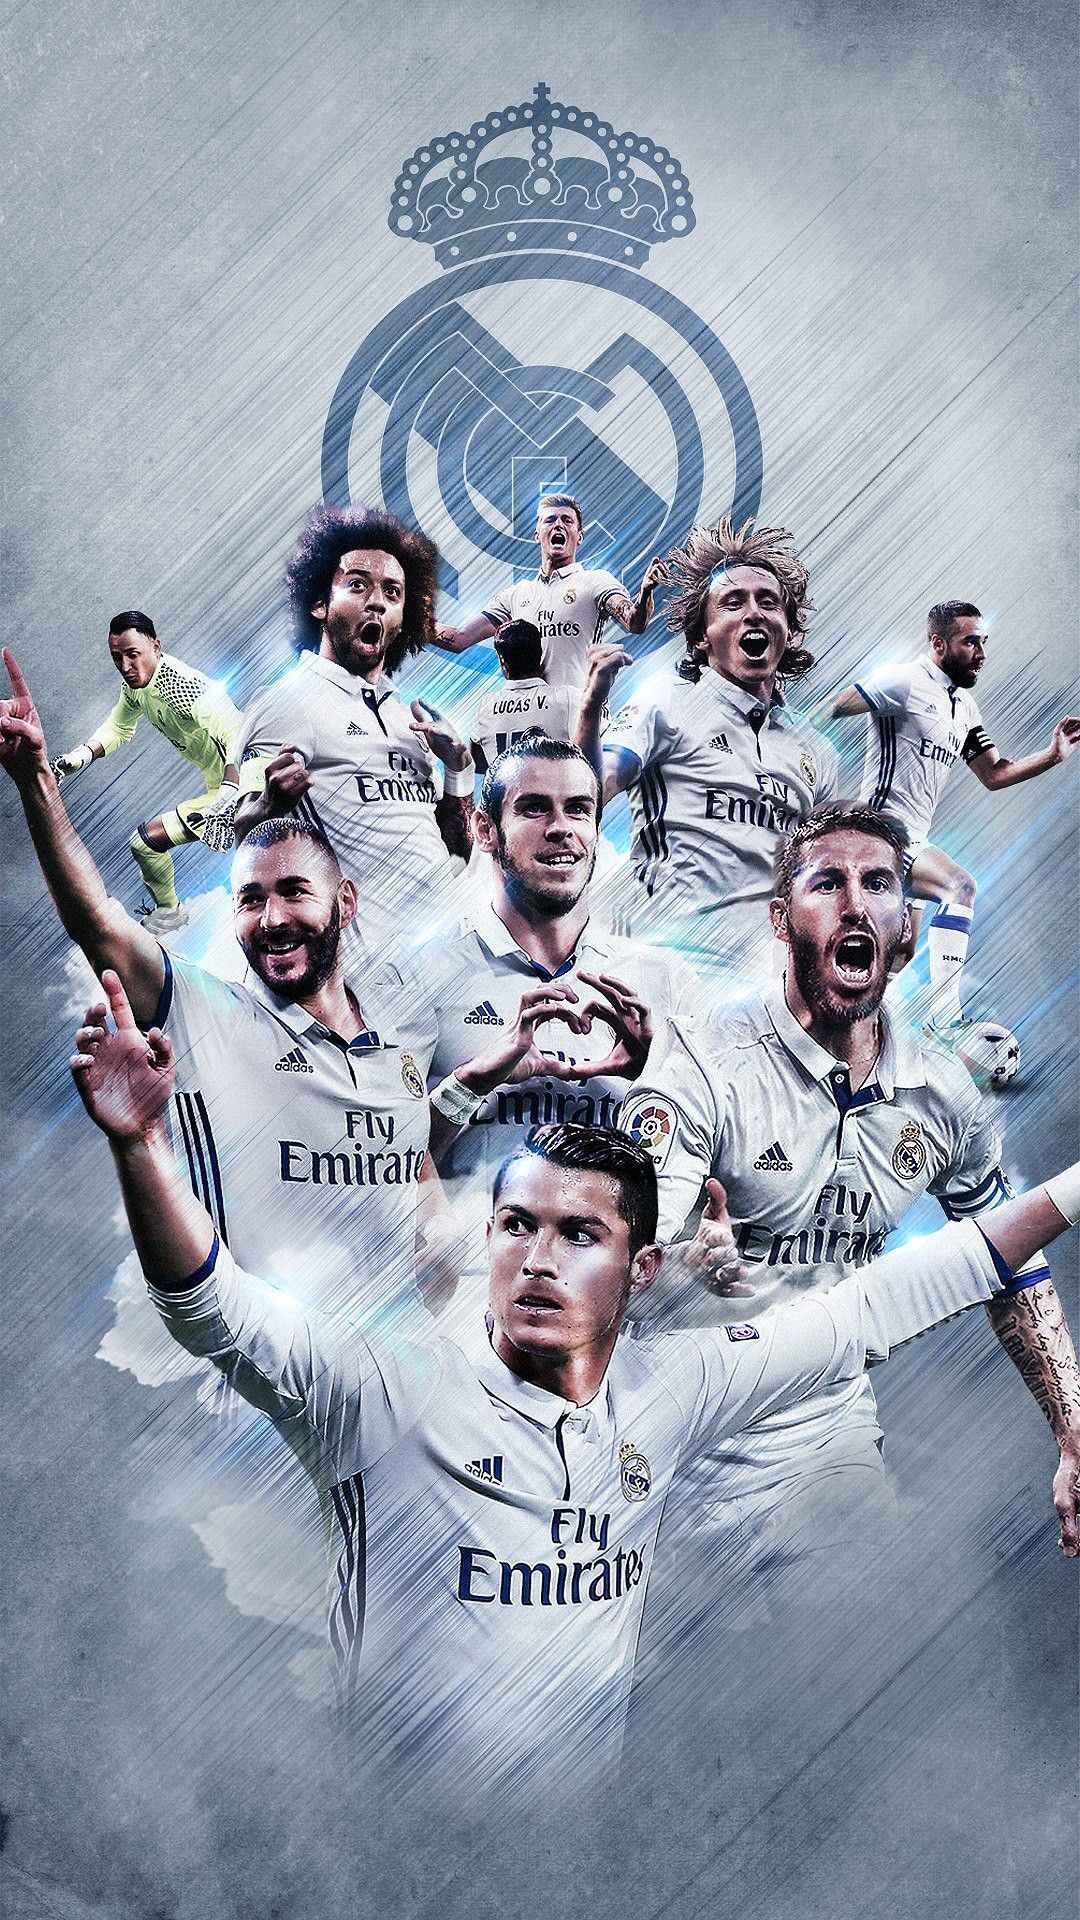 Real Madrid Hintergrundbild 1080x1920. Real Madrid Mobile Wallpaper. Real madrid wallpaper, Real madrid image, Madrid wallpaper